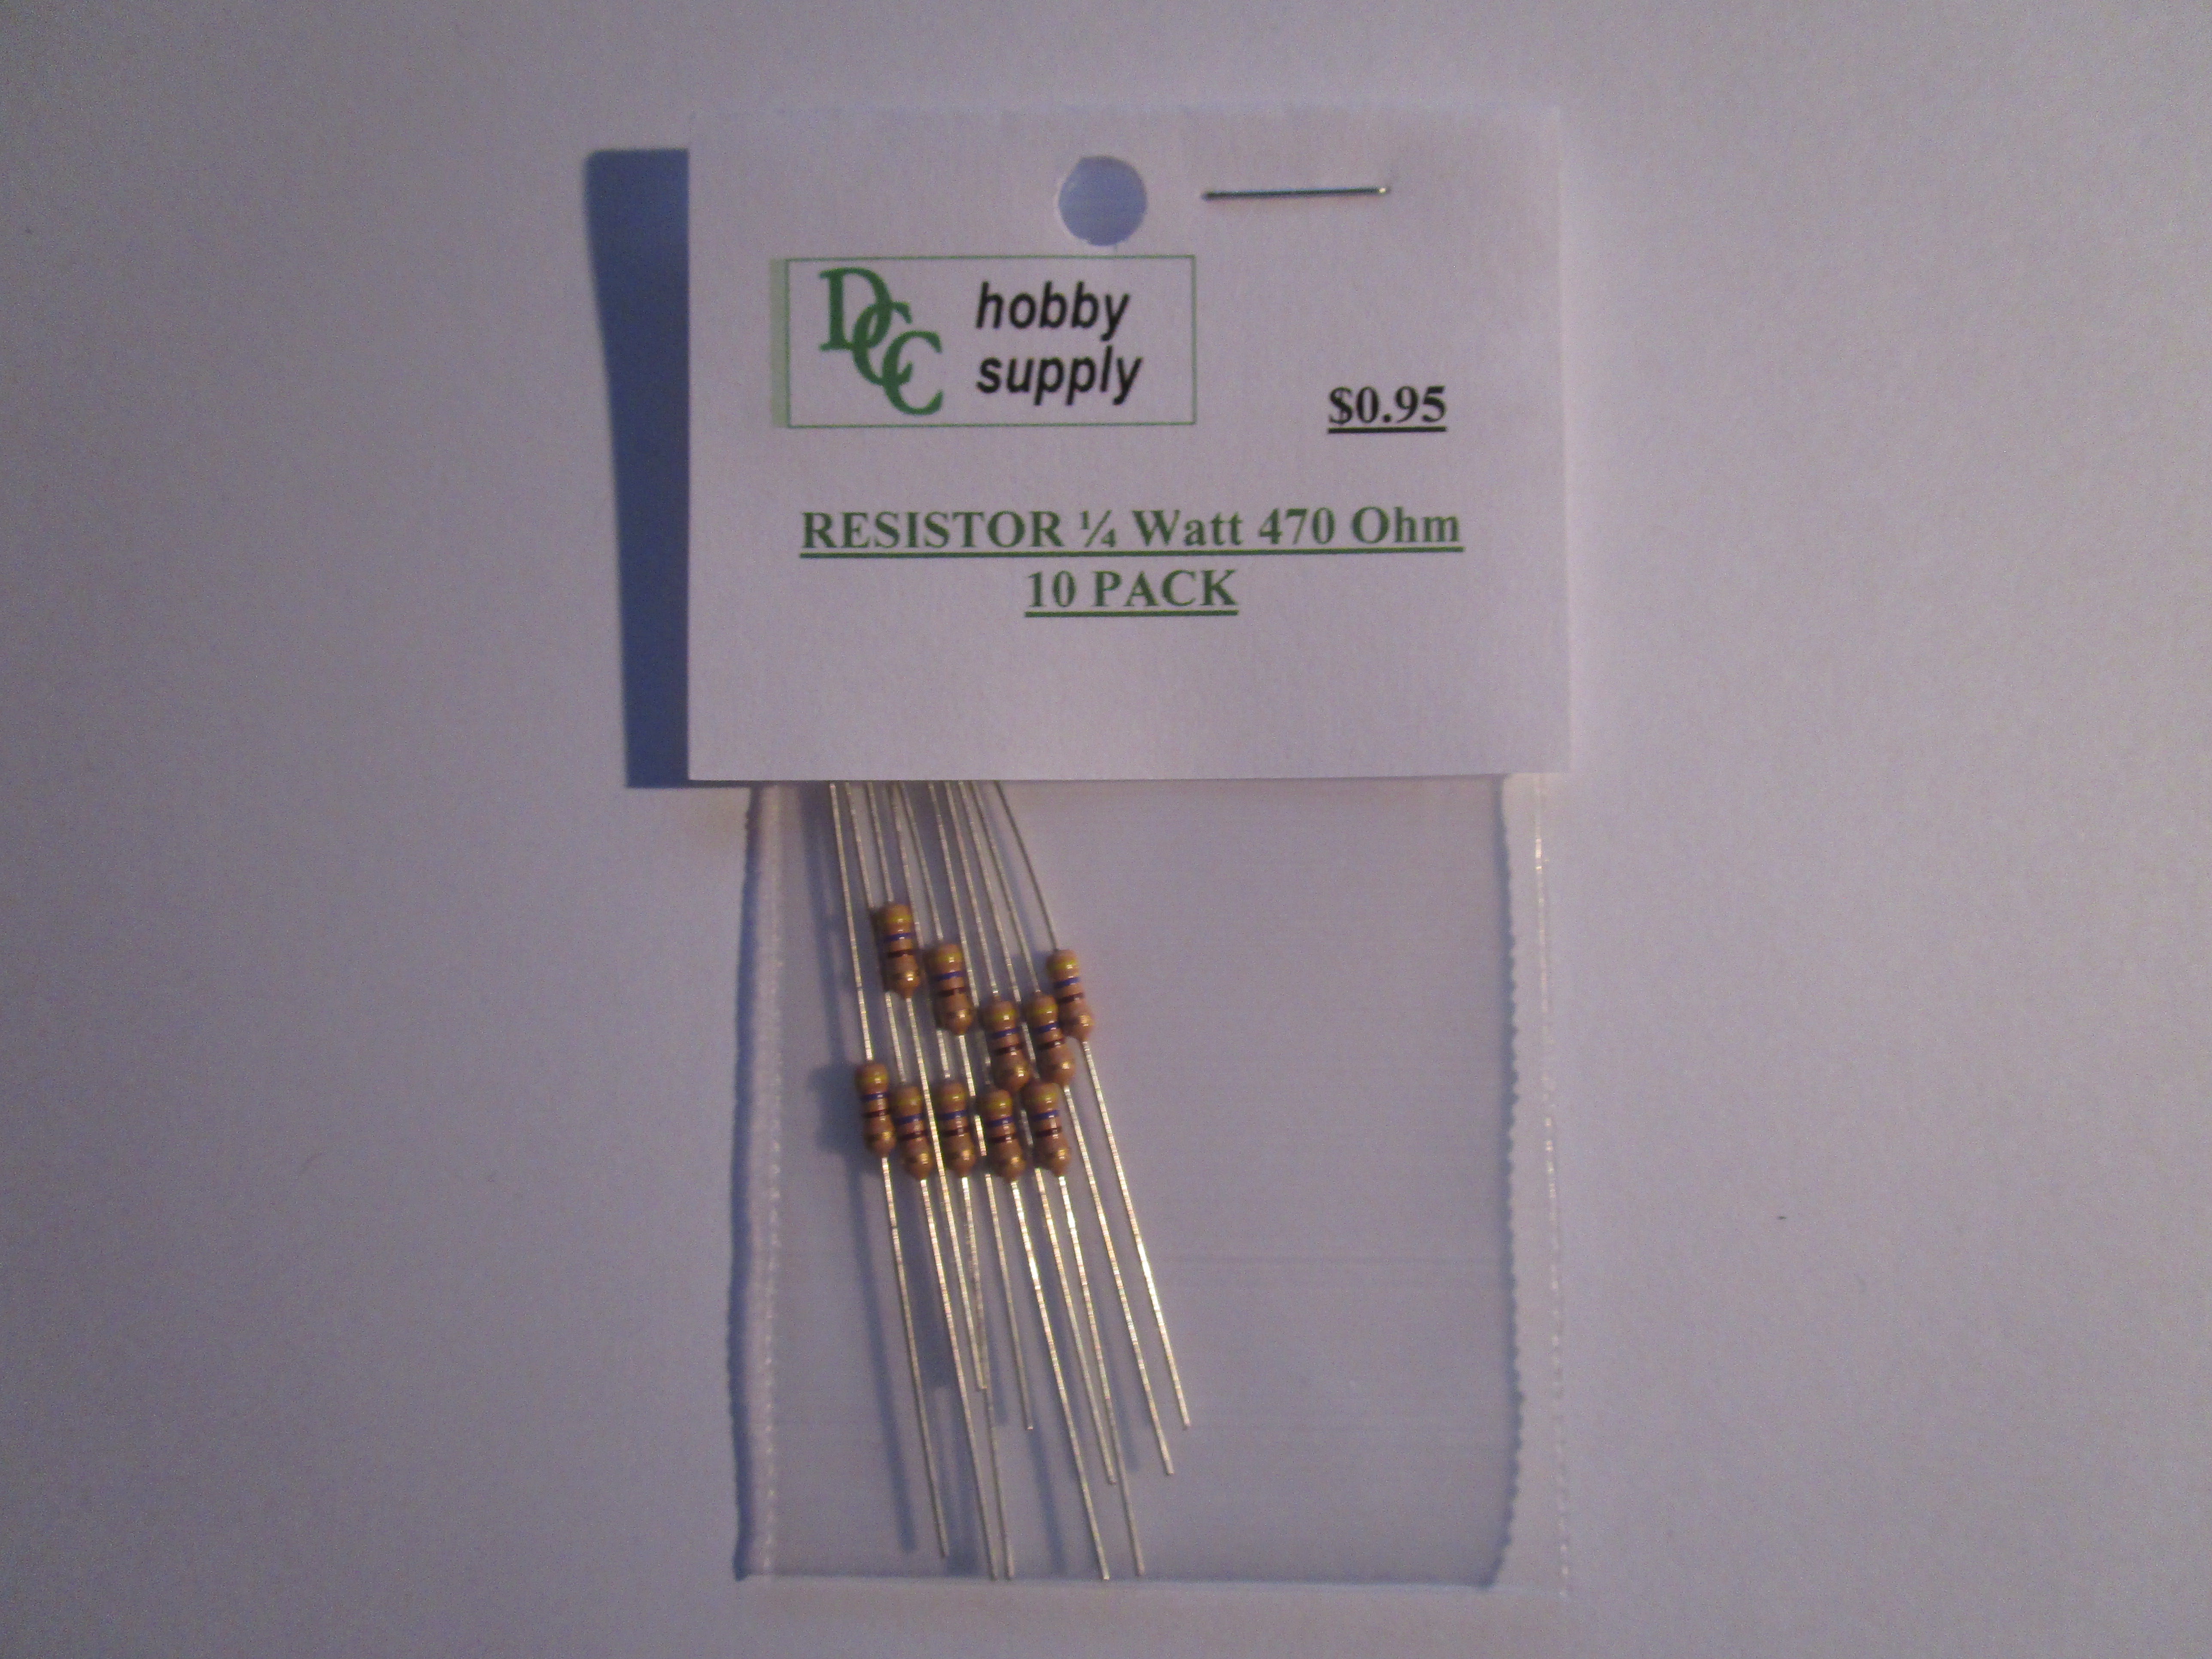 Resistor, 1/4 watt 470 Ohm (10 pack)